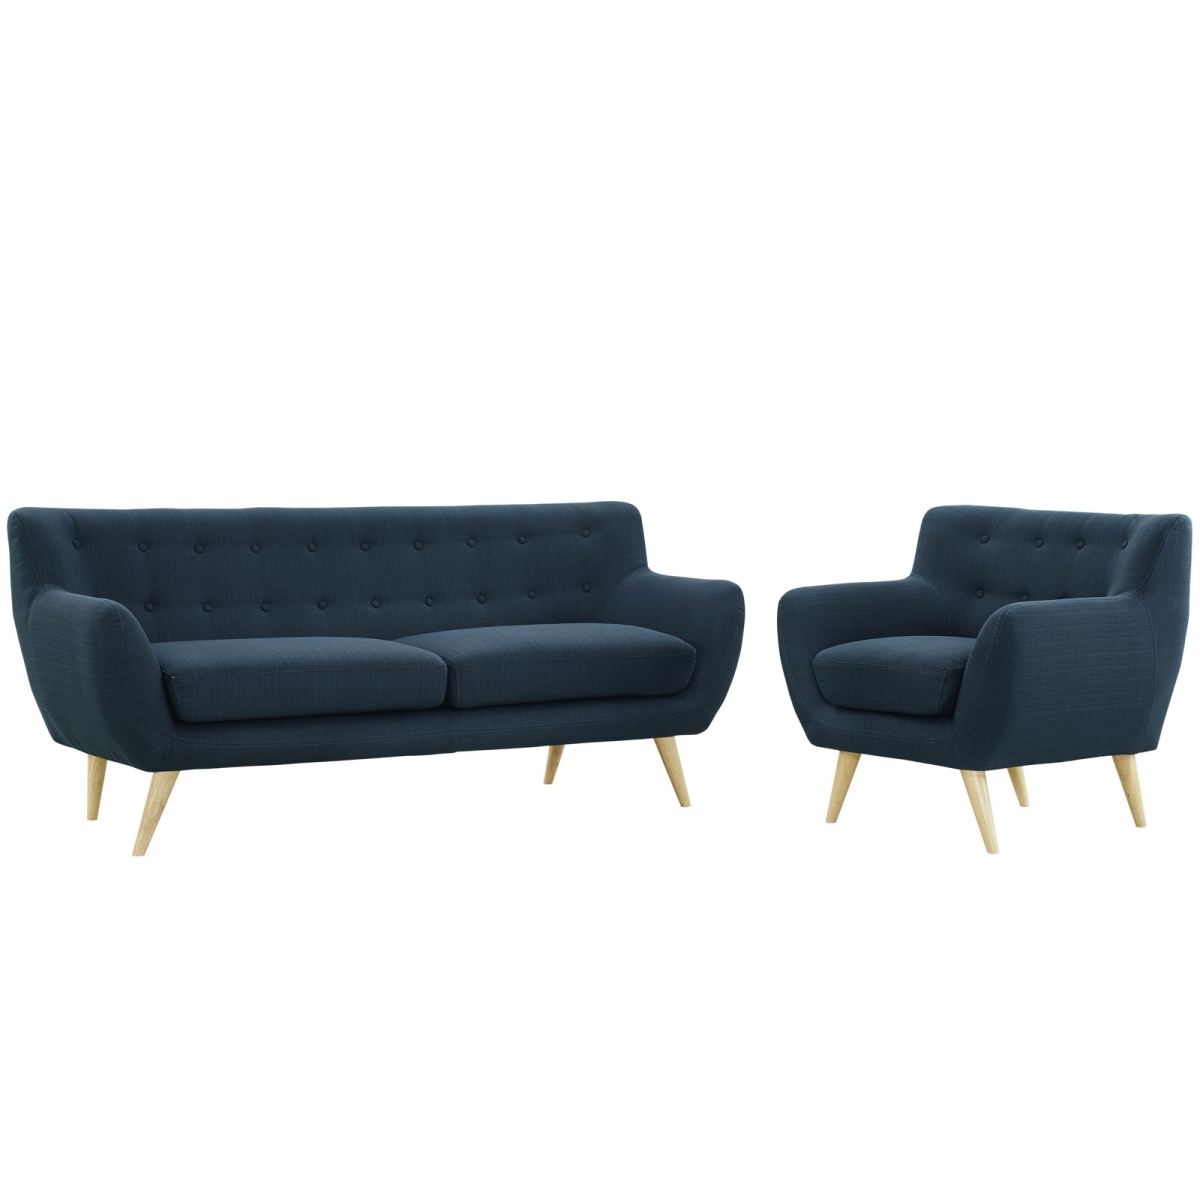 Eastend Eei-1784-azu-set Remark Sofa & Armchair Set In Tufted Azure Fabric On Natural Wood Legs